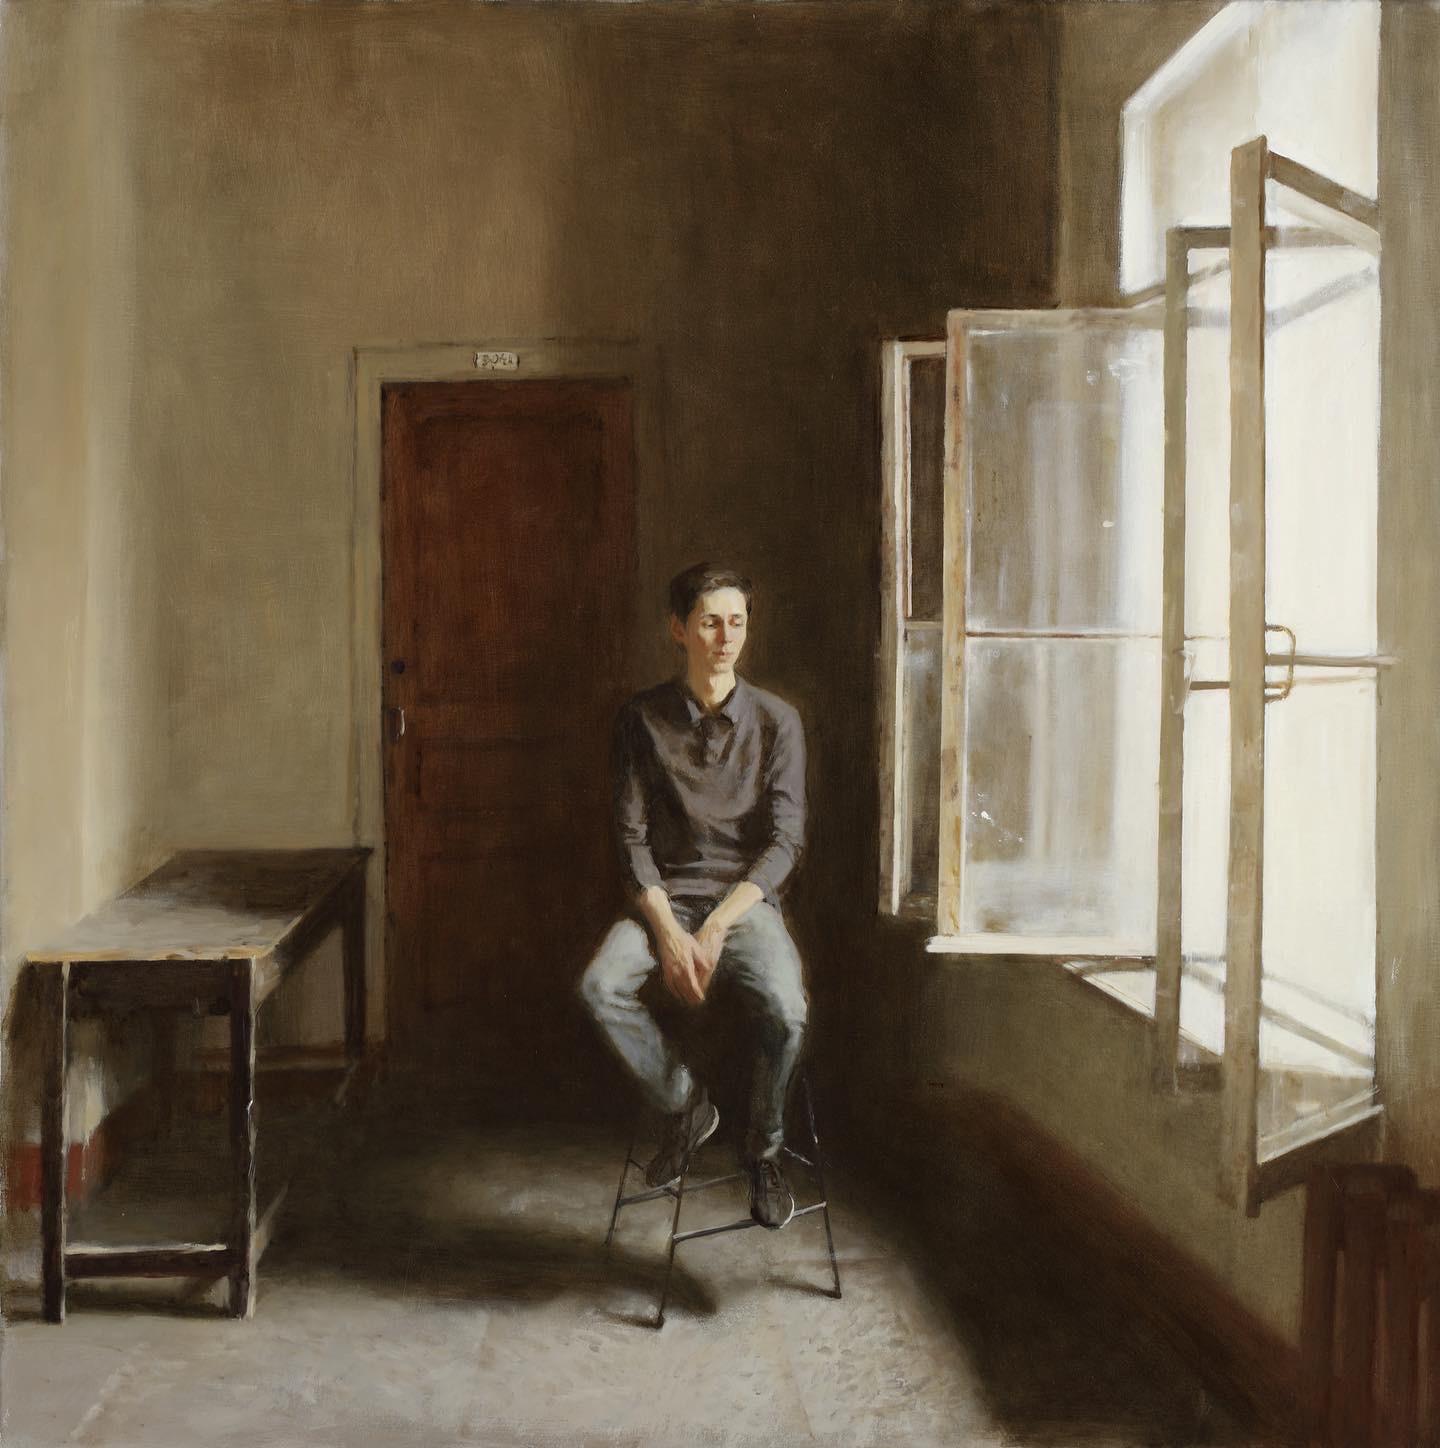 Ksenya Istomina Figurative Painting - Waiting-21st Century Contemporary Painting of young man sitting in window light